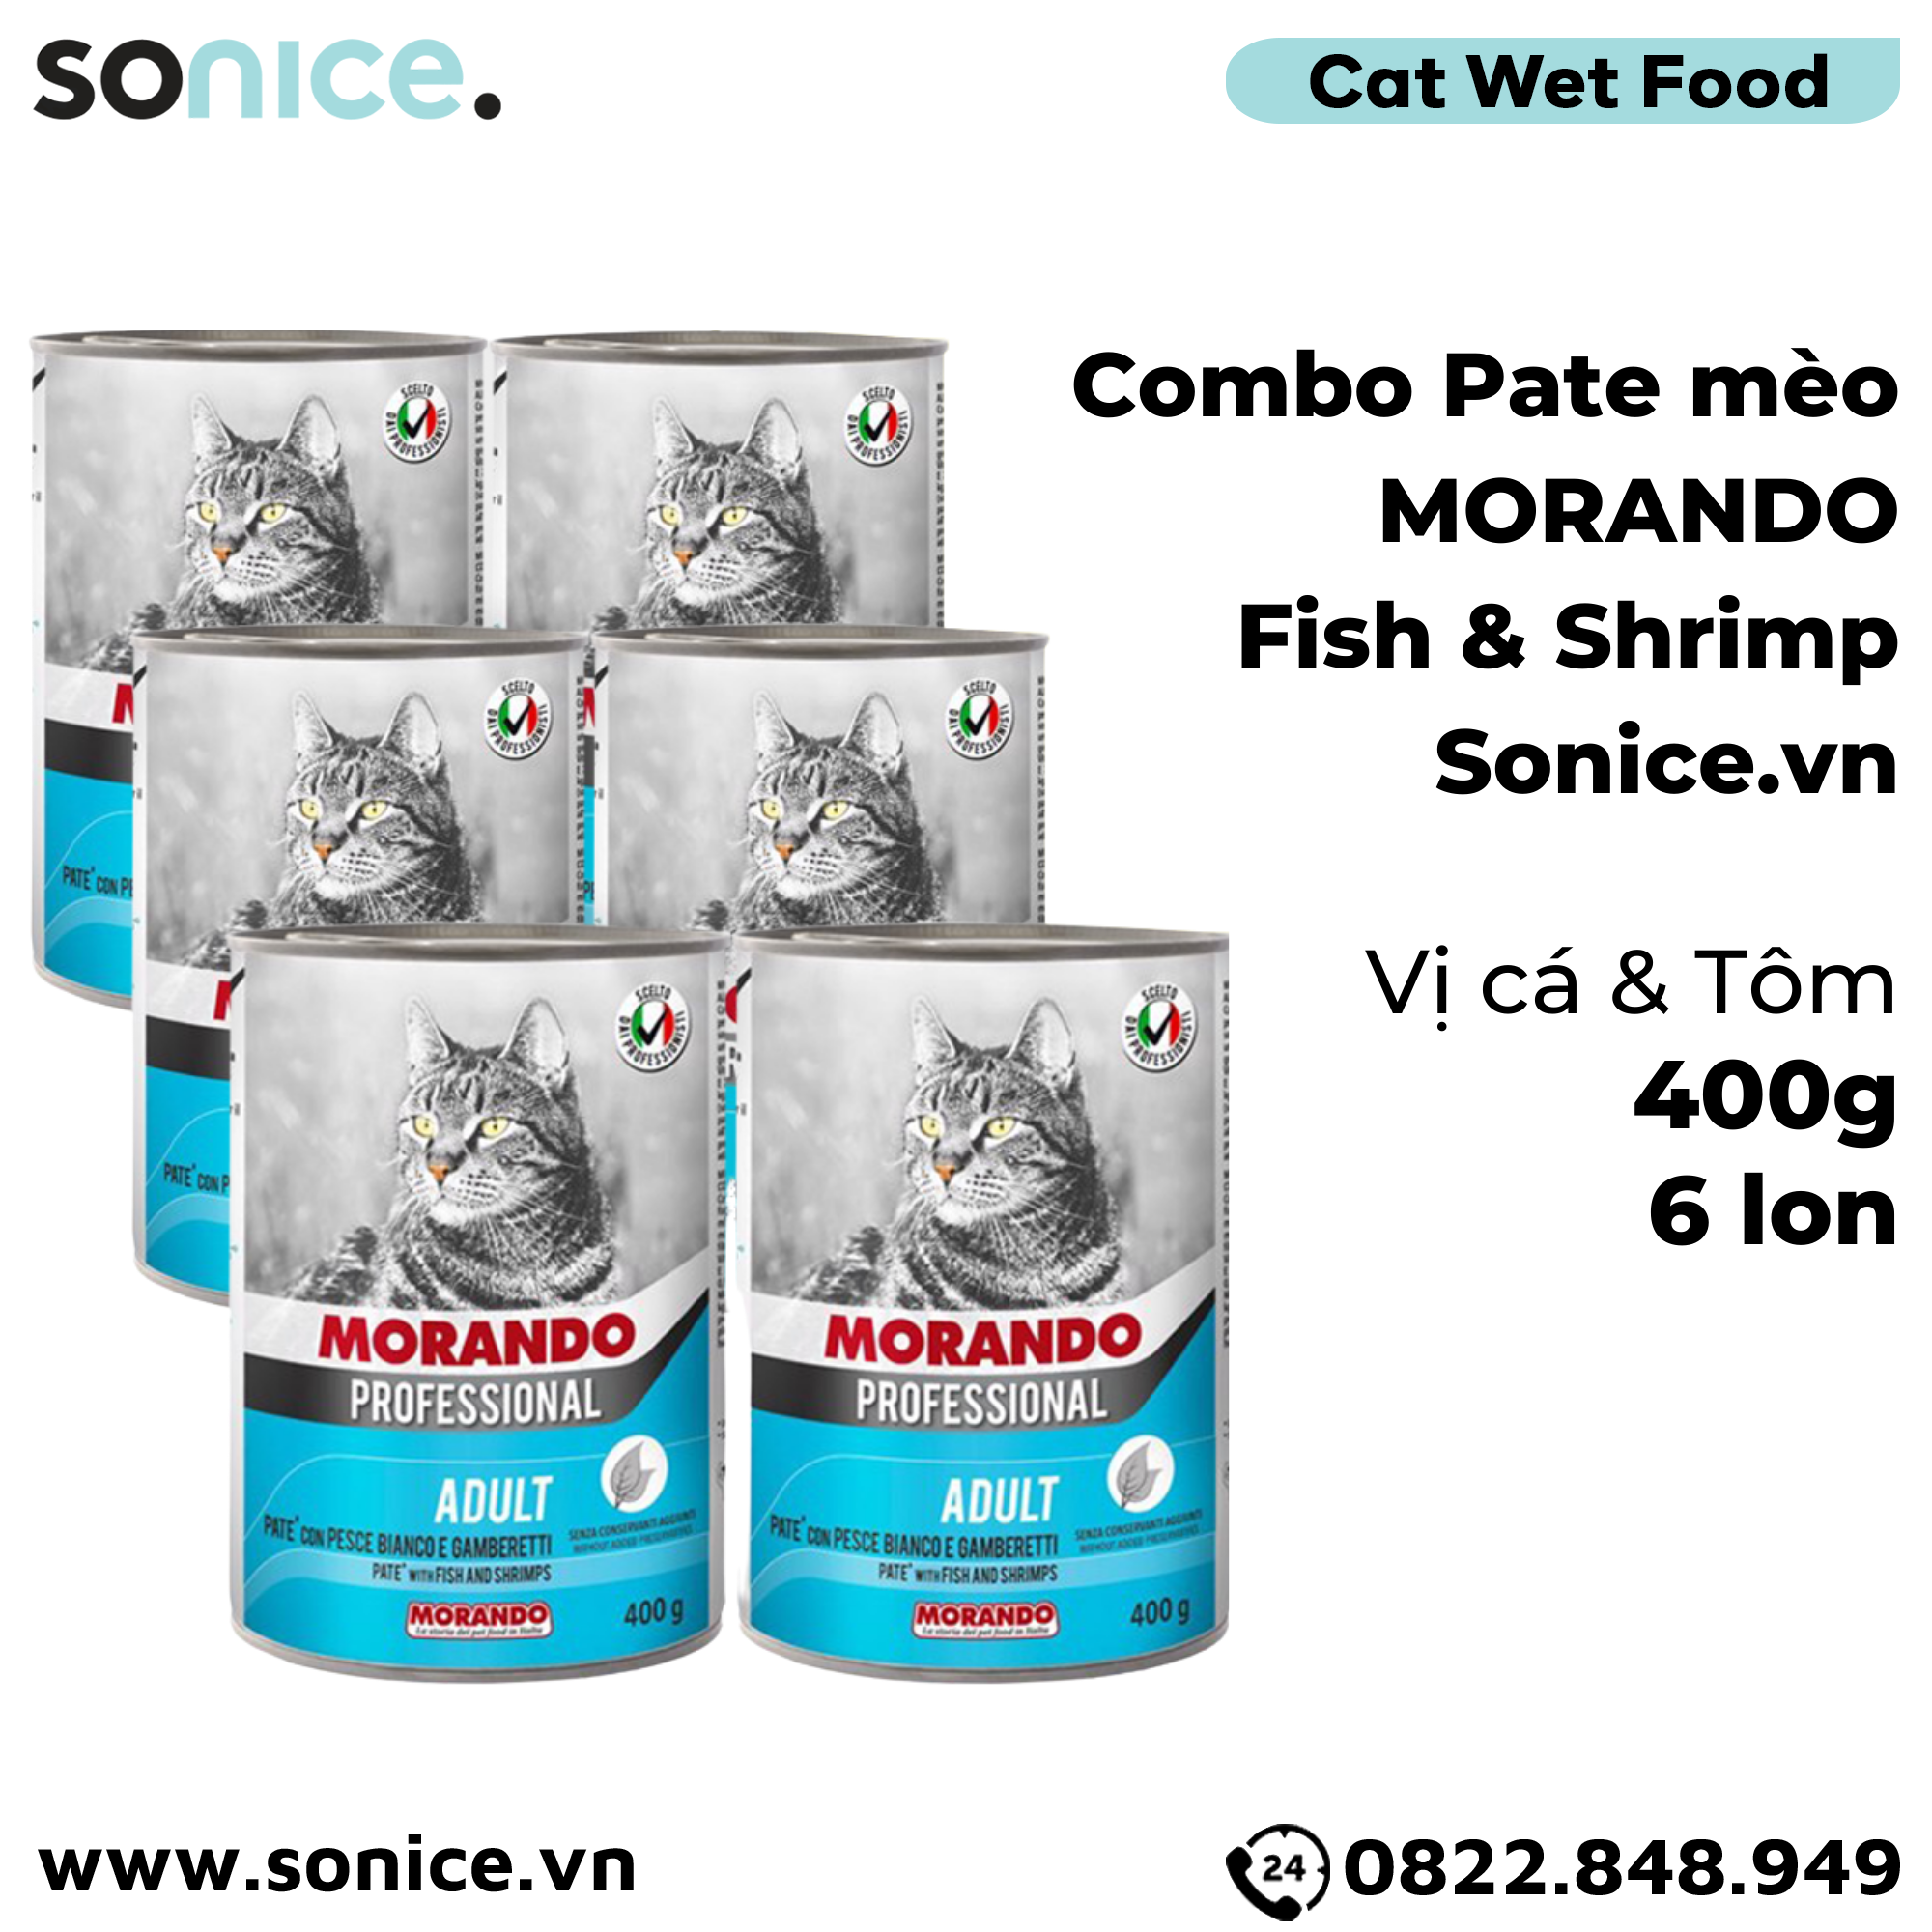  Combo Pate mèo Morando vị Cá & Tôm 400g - 6 lon  SONICE. 